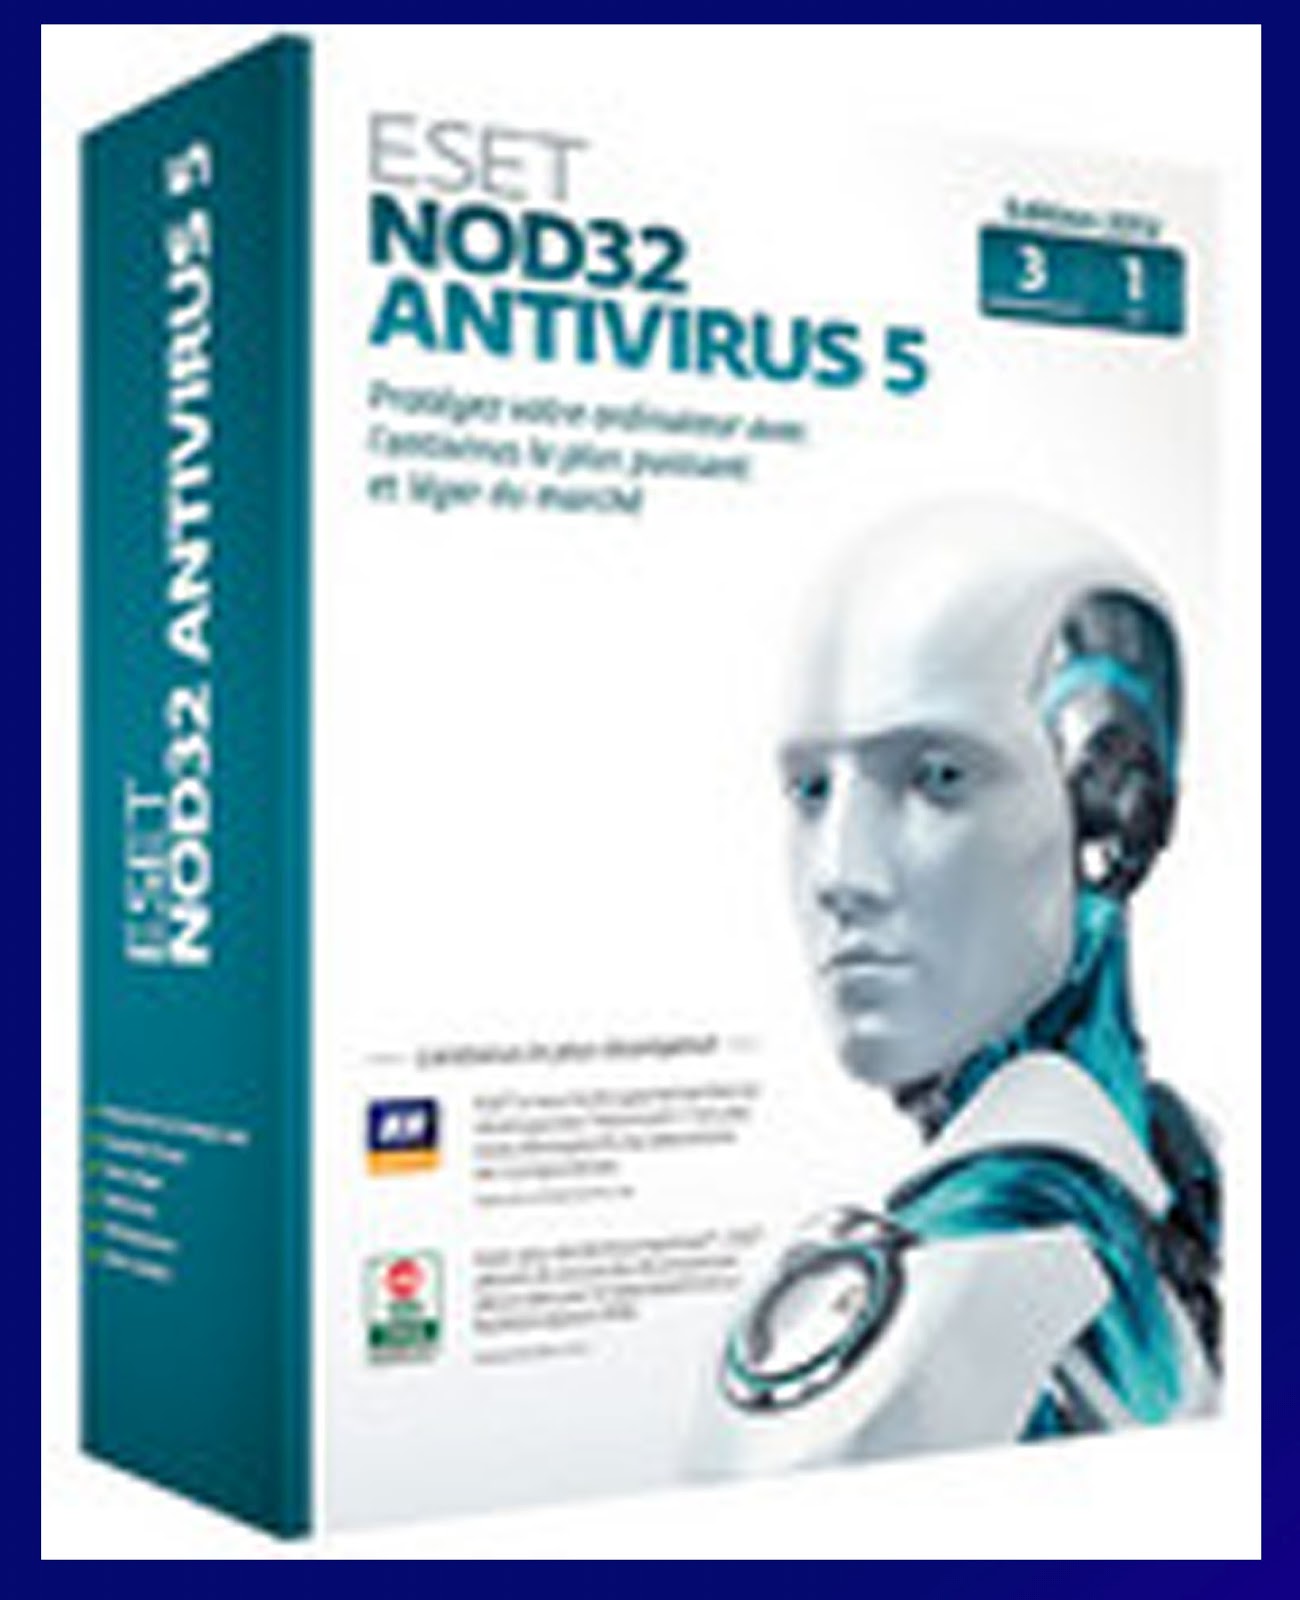 free antivirus nod32 software download